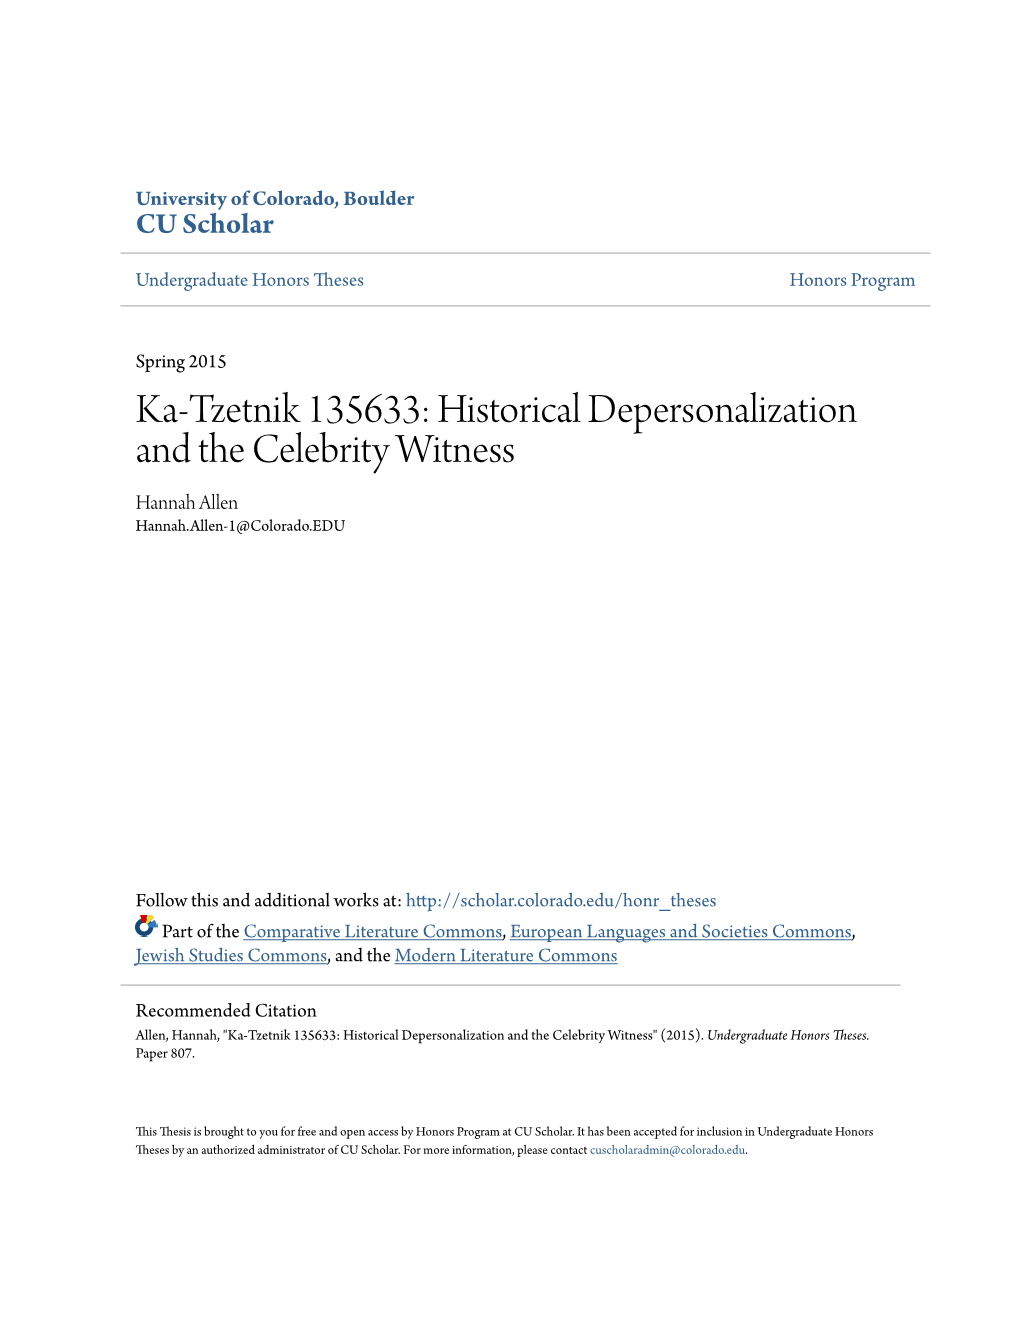 Ka-Tzetnik 135633: Historical Depersonalization and the Celebrity Witness Hannah Allen Hannah.Allen-1@Colorado.EDU